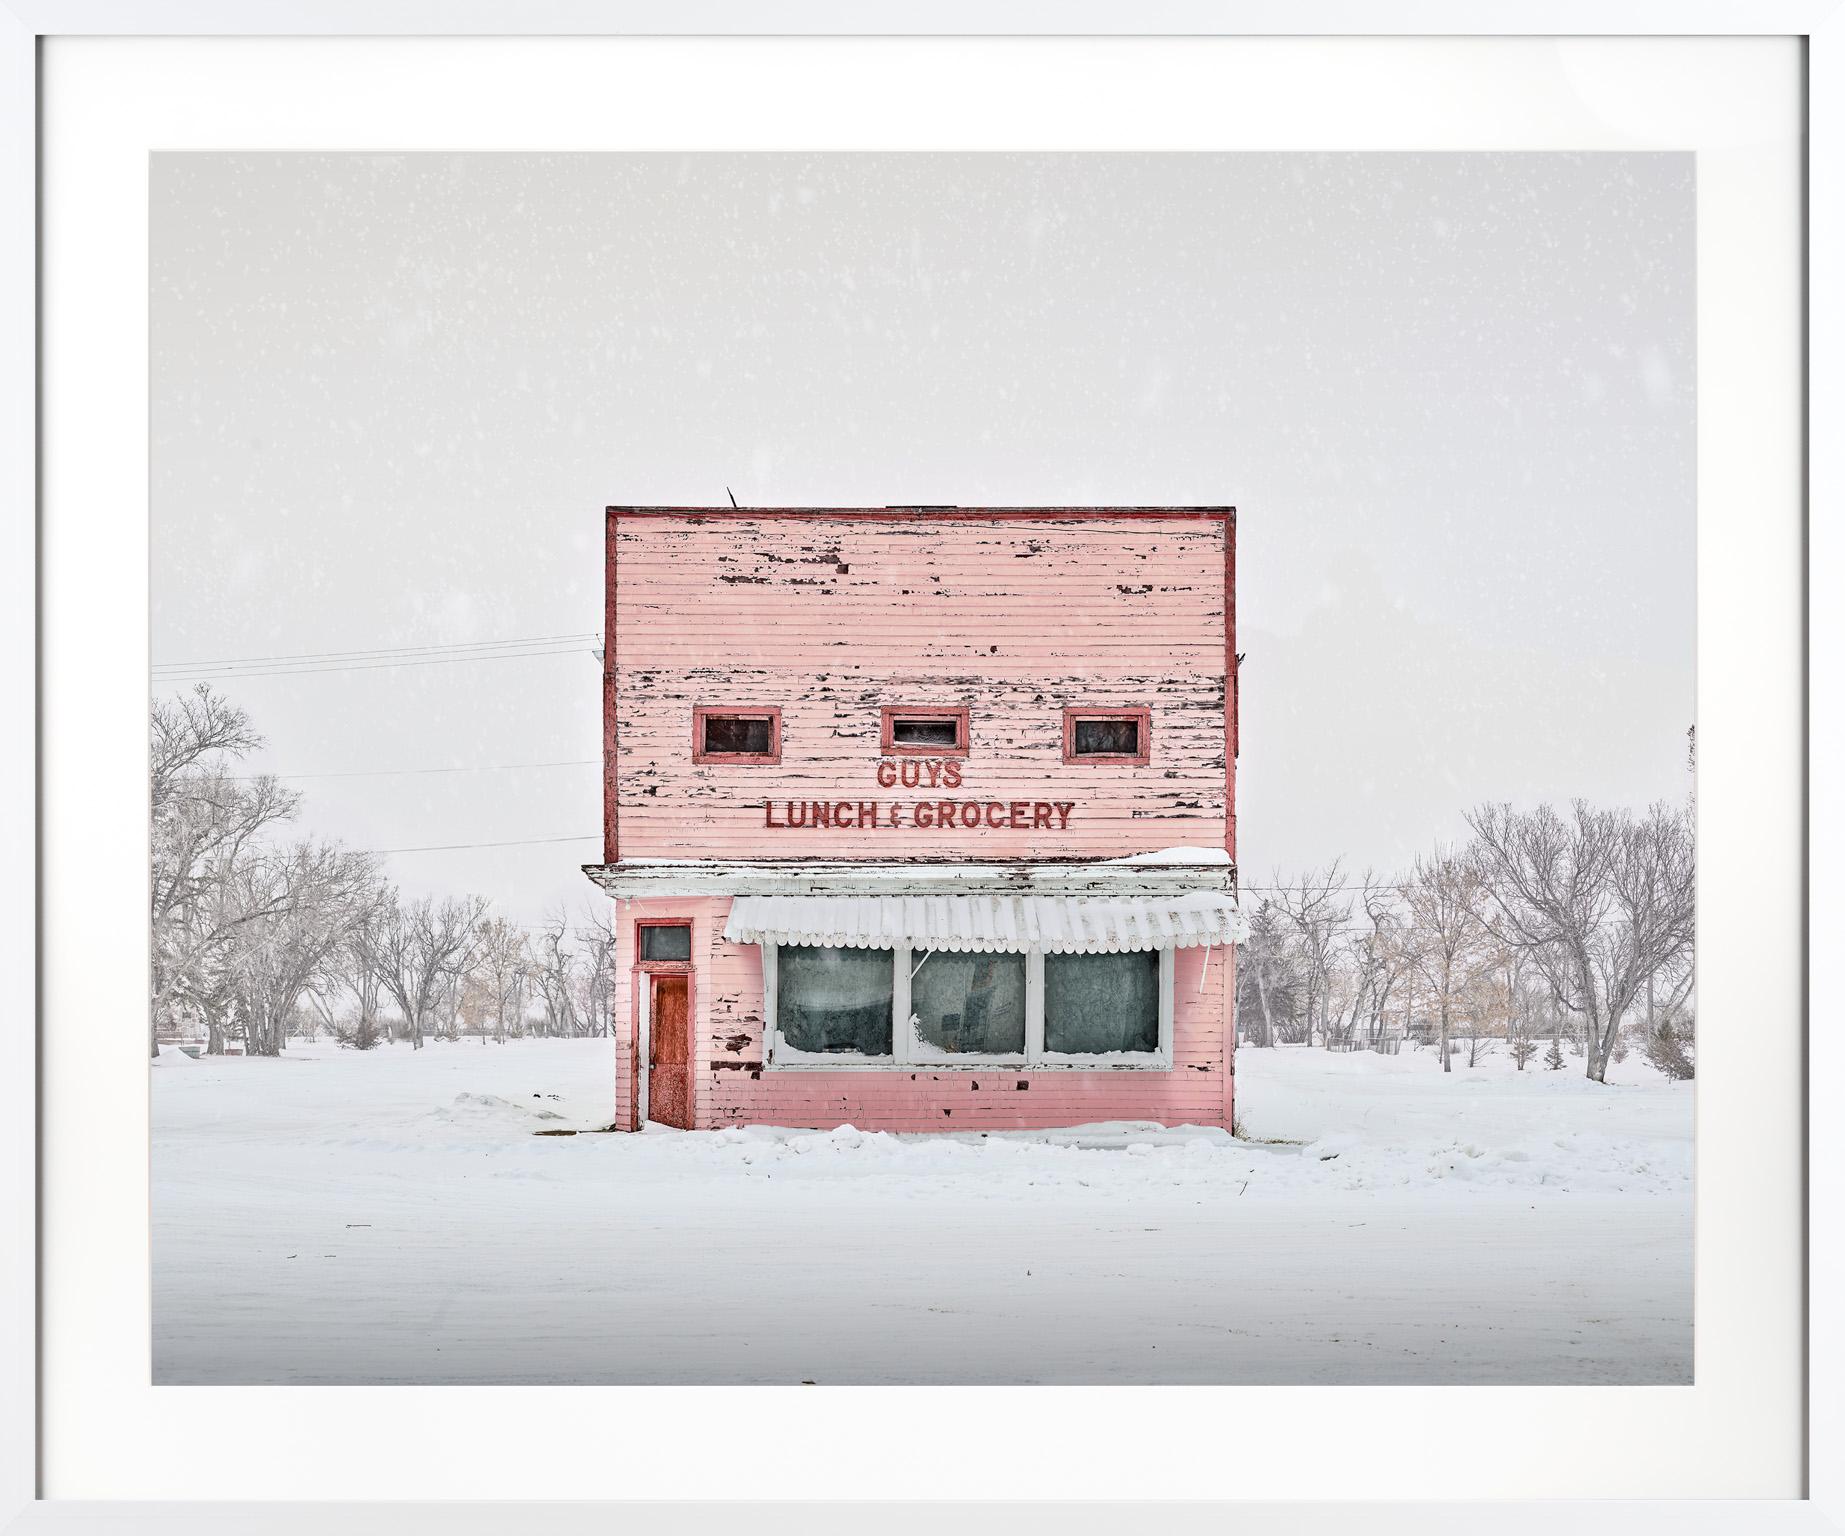 David Burdeny Landscape Photograph - Guy's Lunch & Grocery, Saskatchewan, Canada